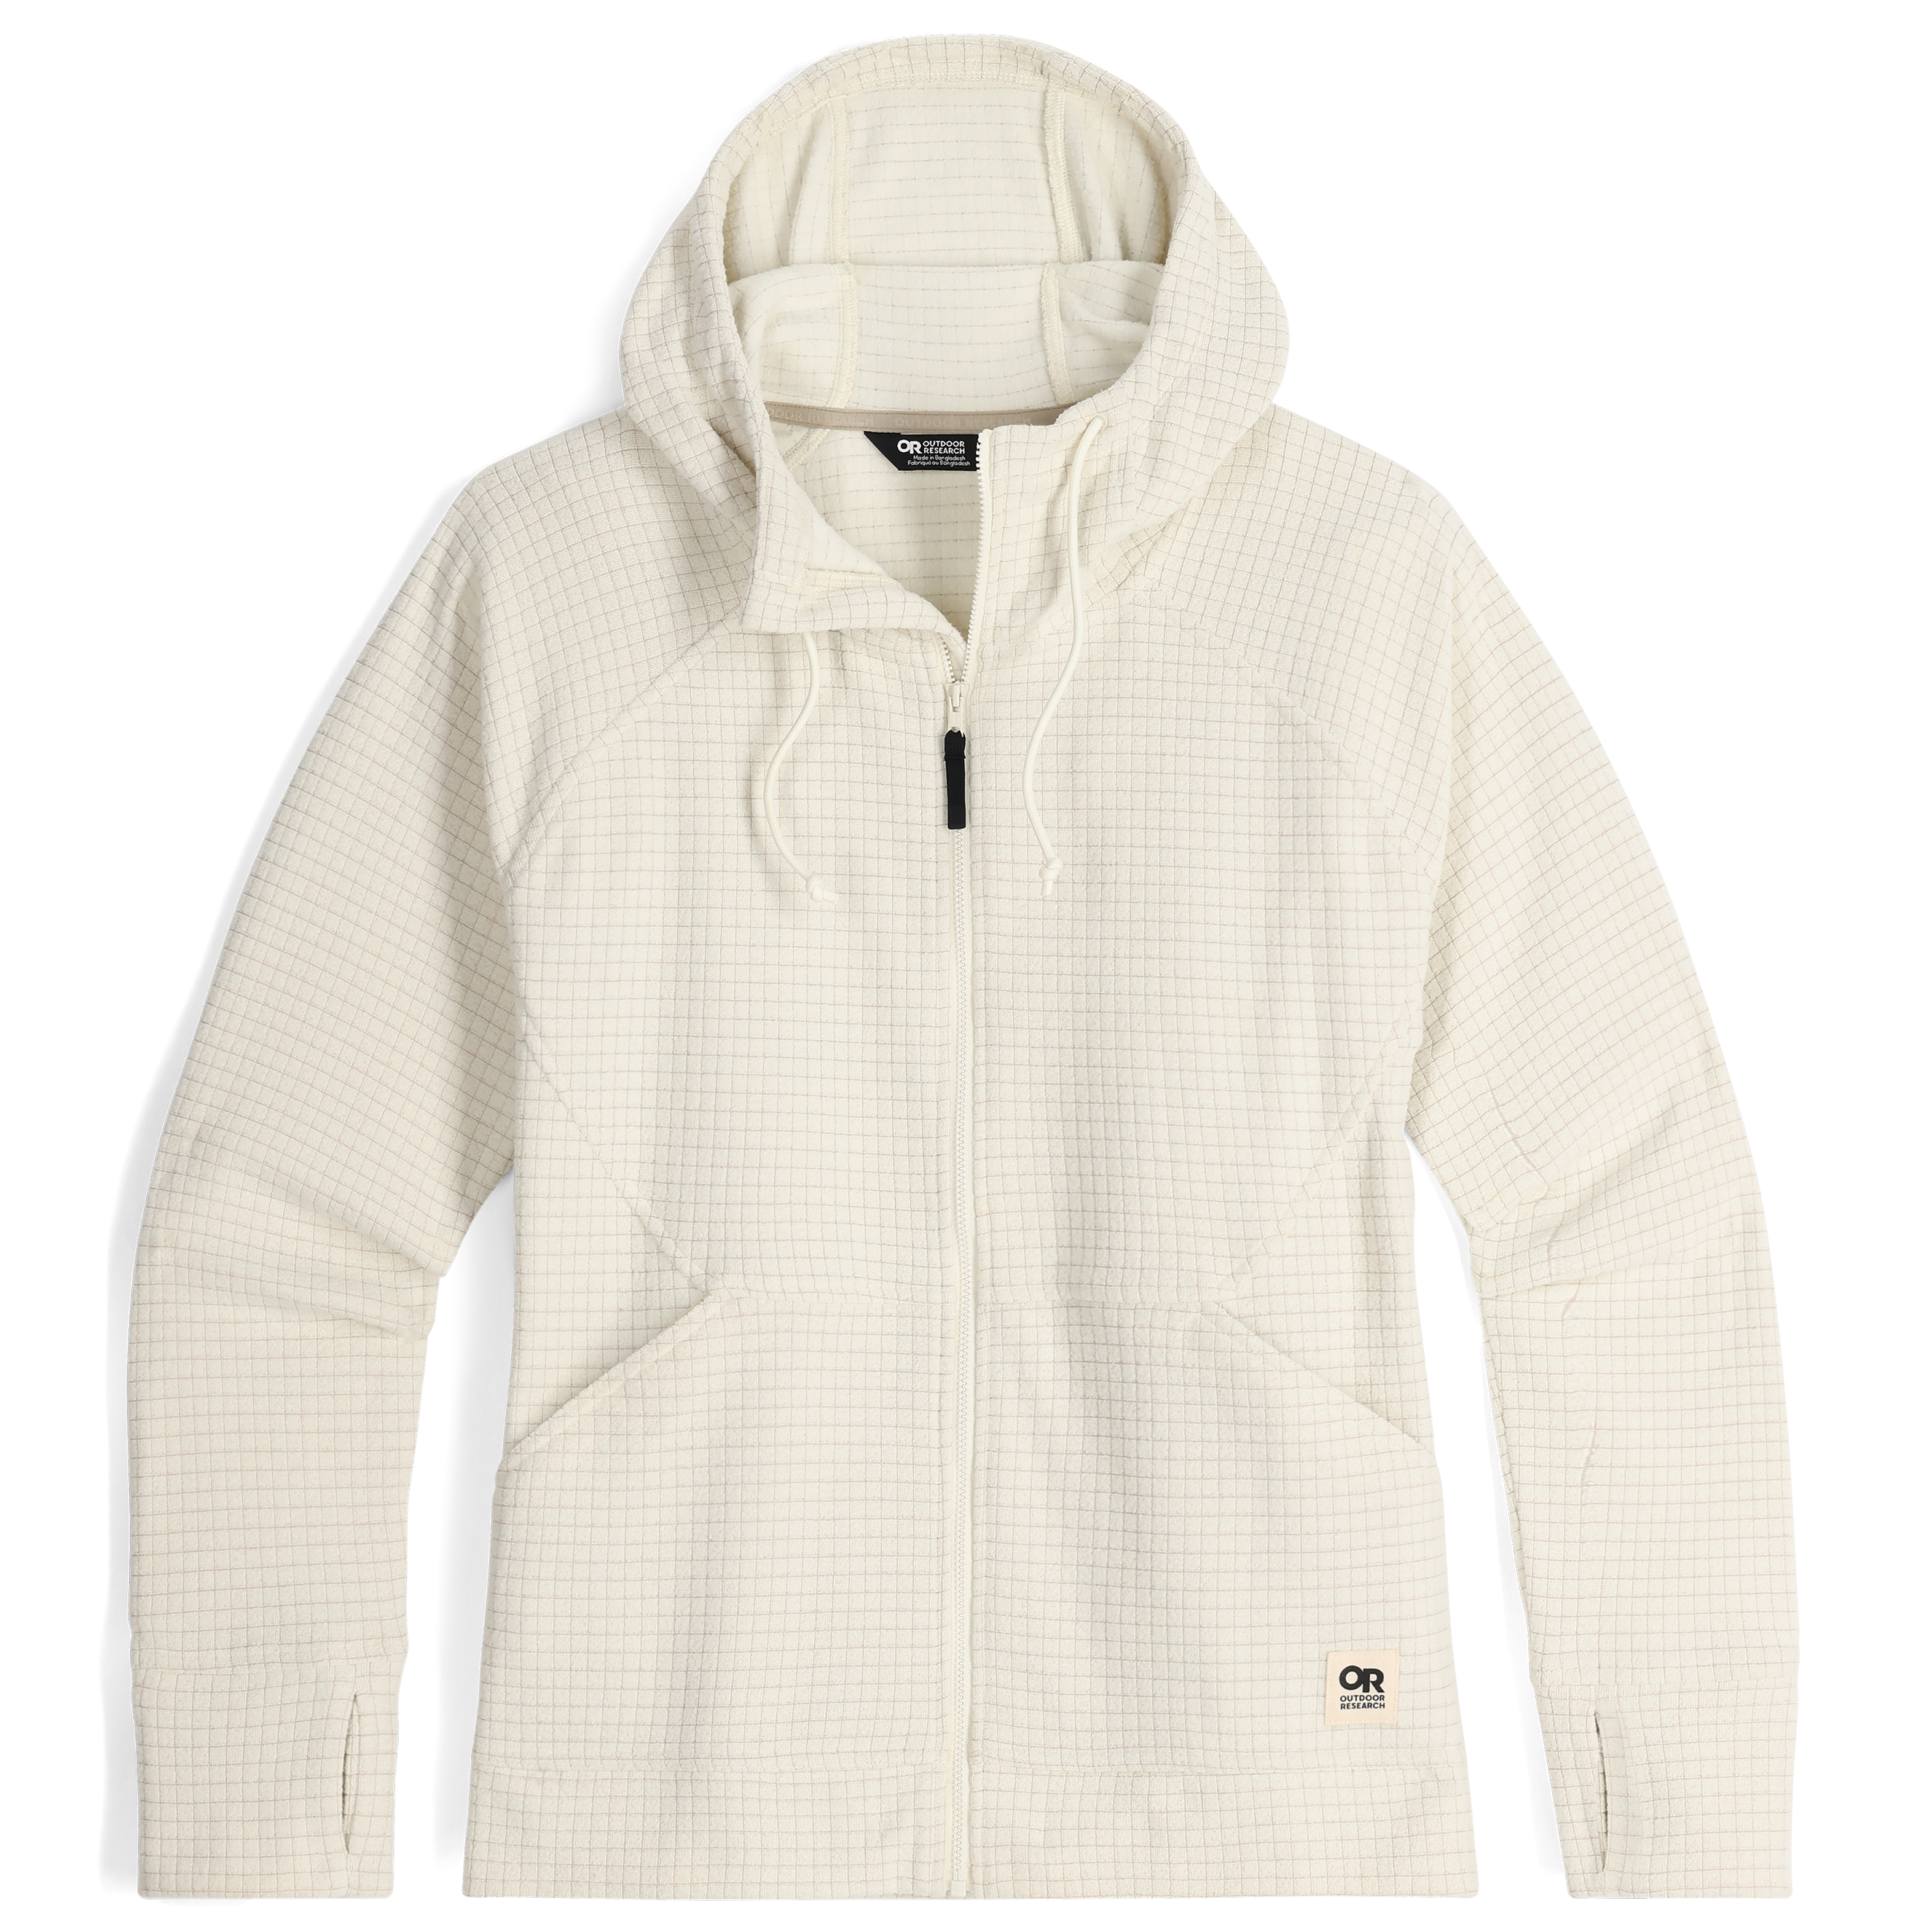 Brandit TEDDY - Fleece jacket - white - Zalando.de